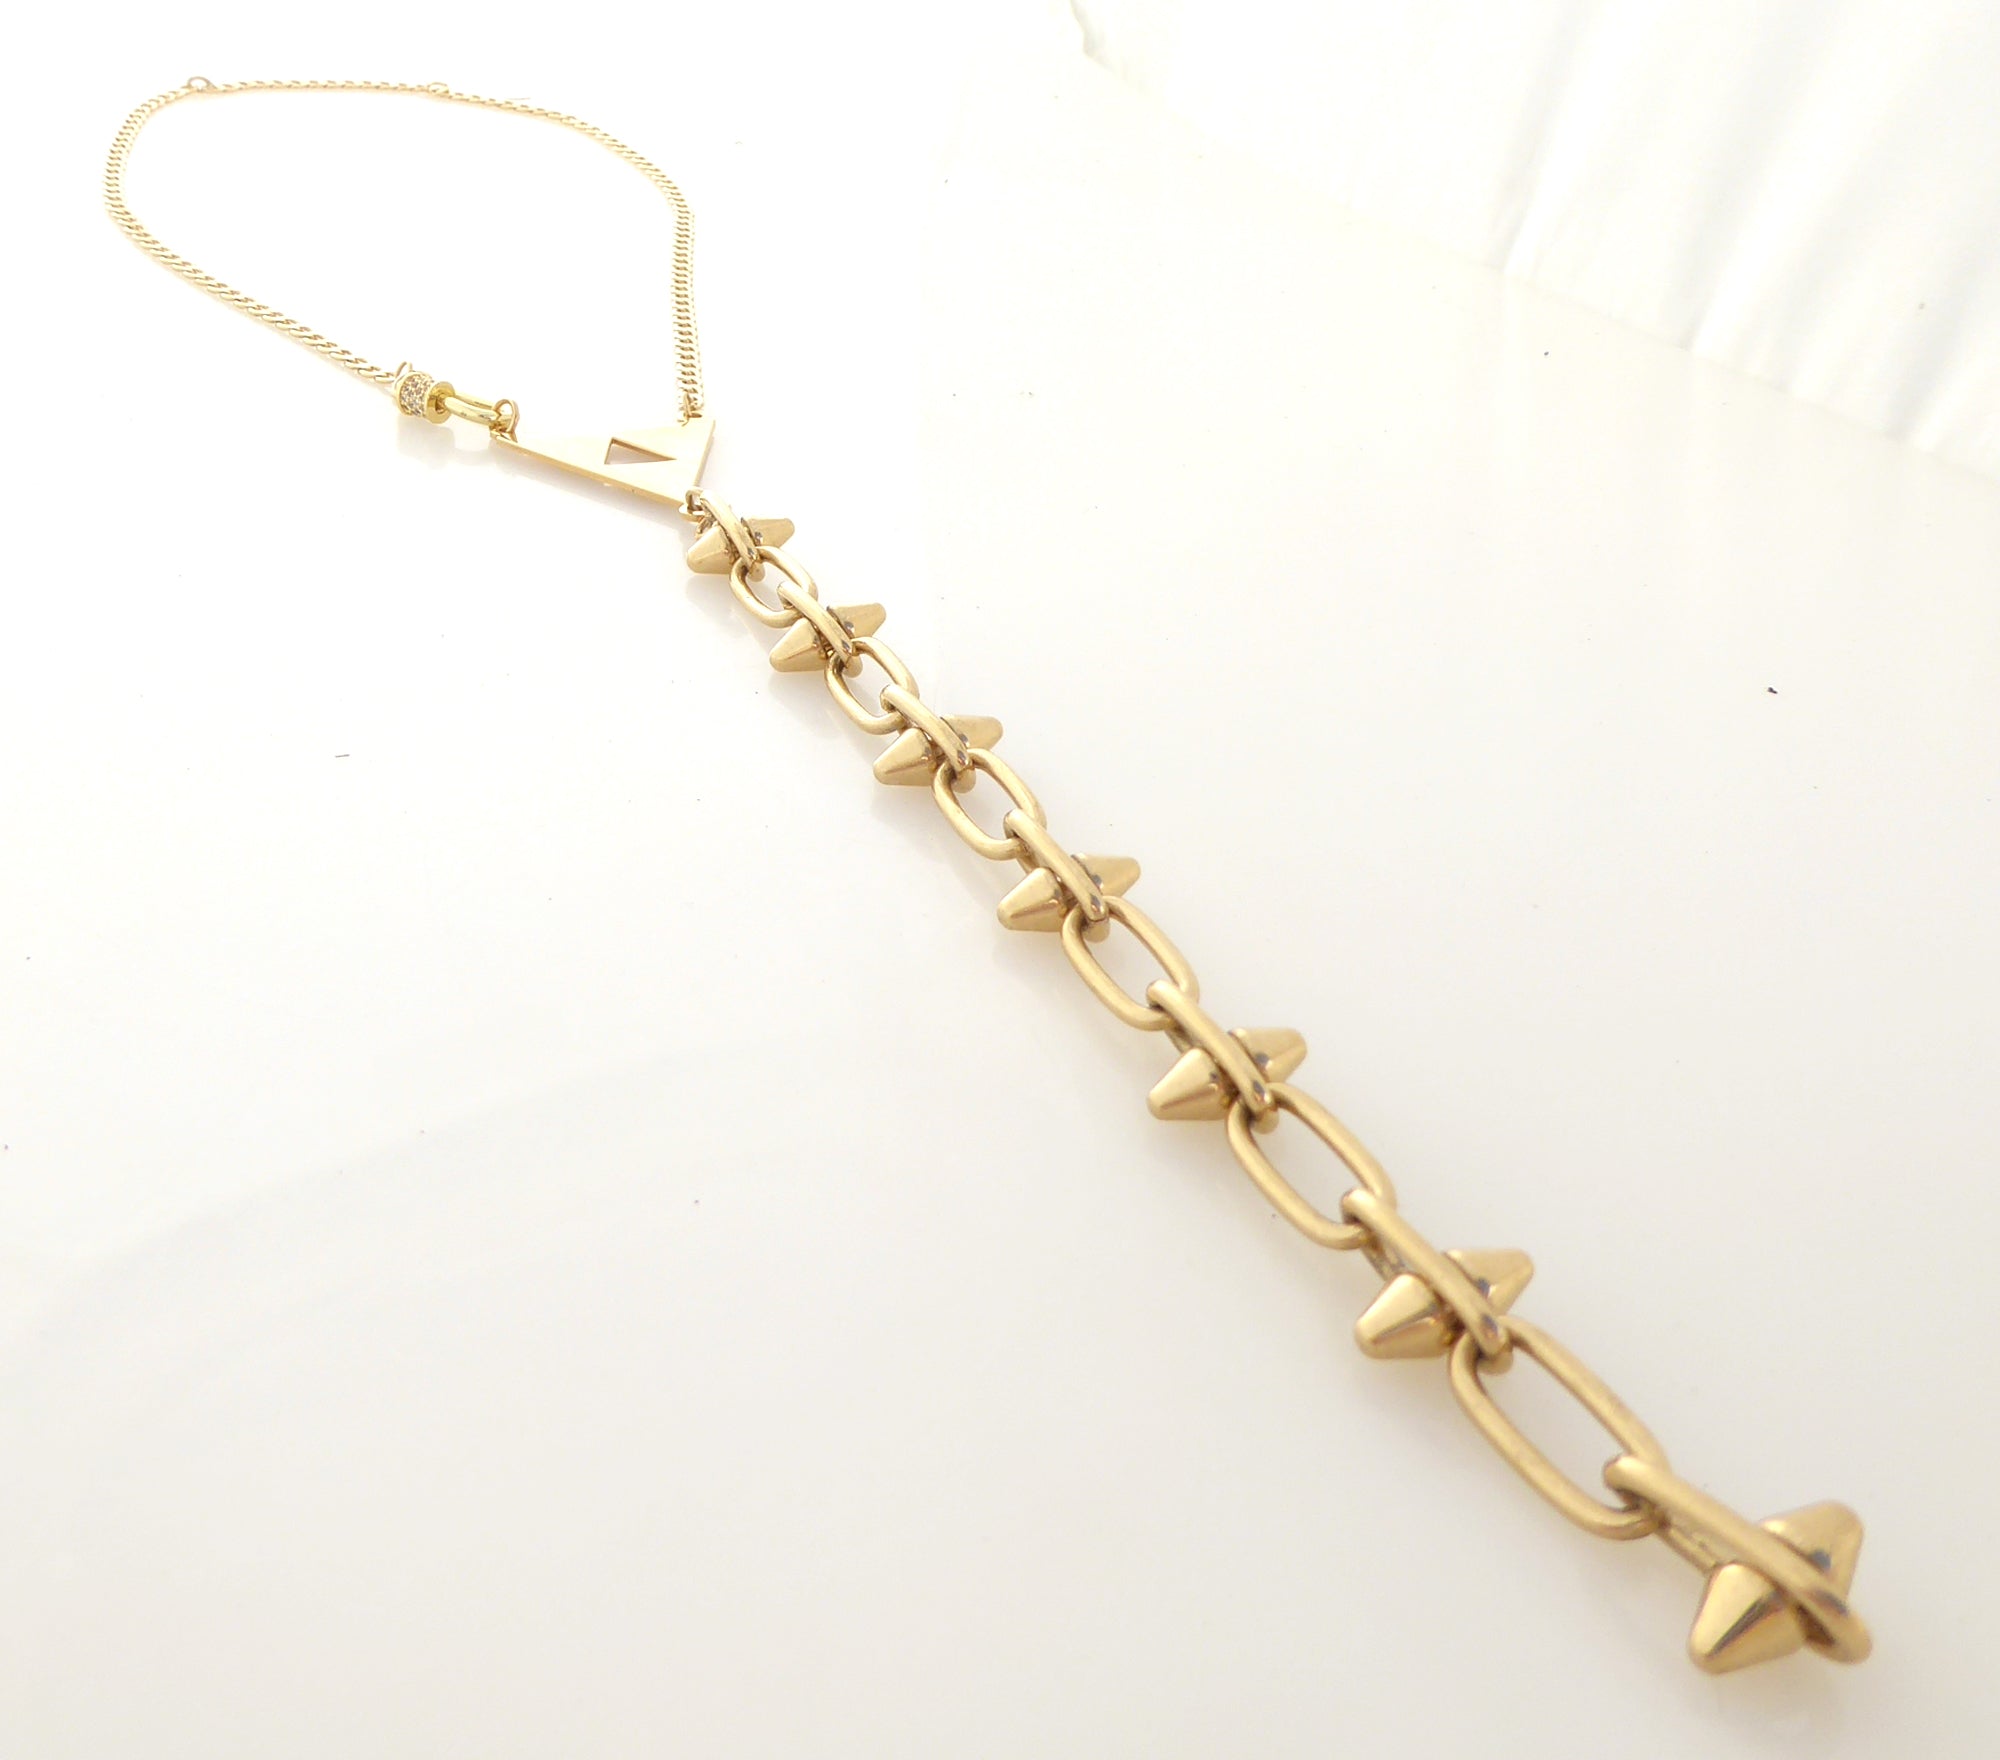 Triangular spike necklace